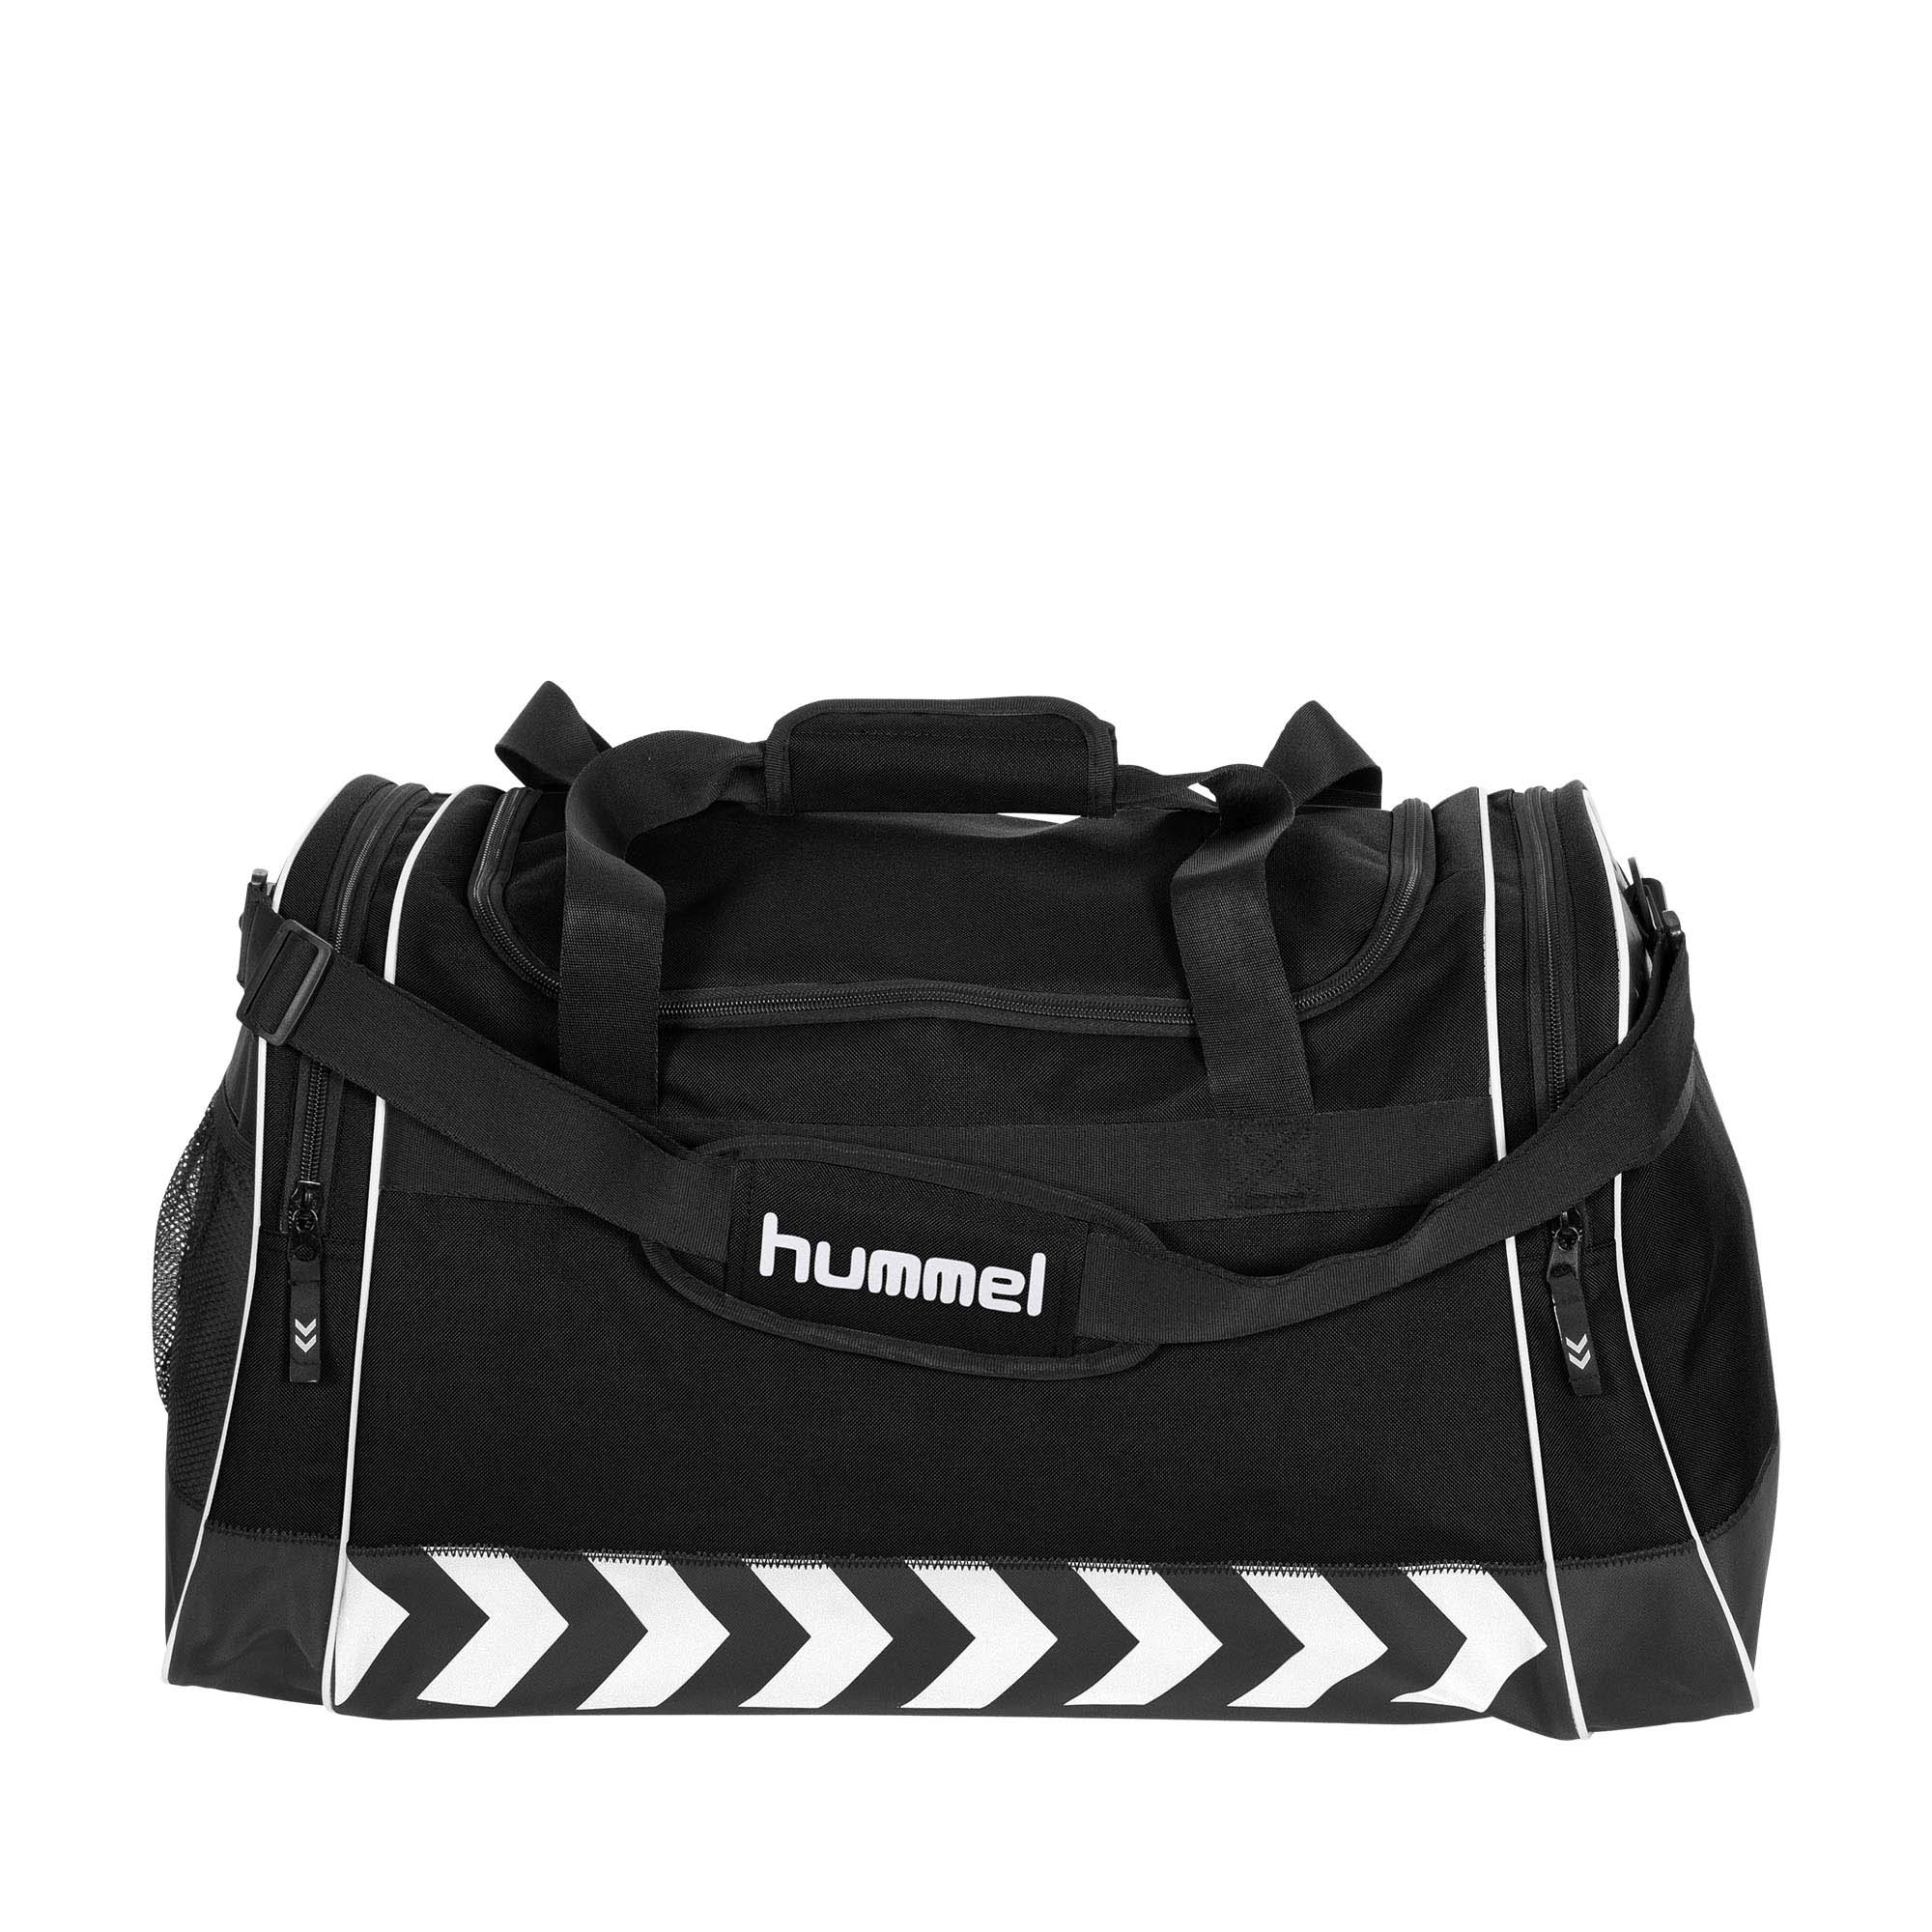 HUMMEL Bag Luton